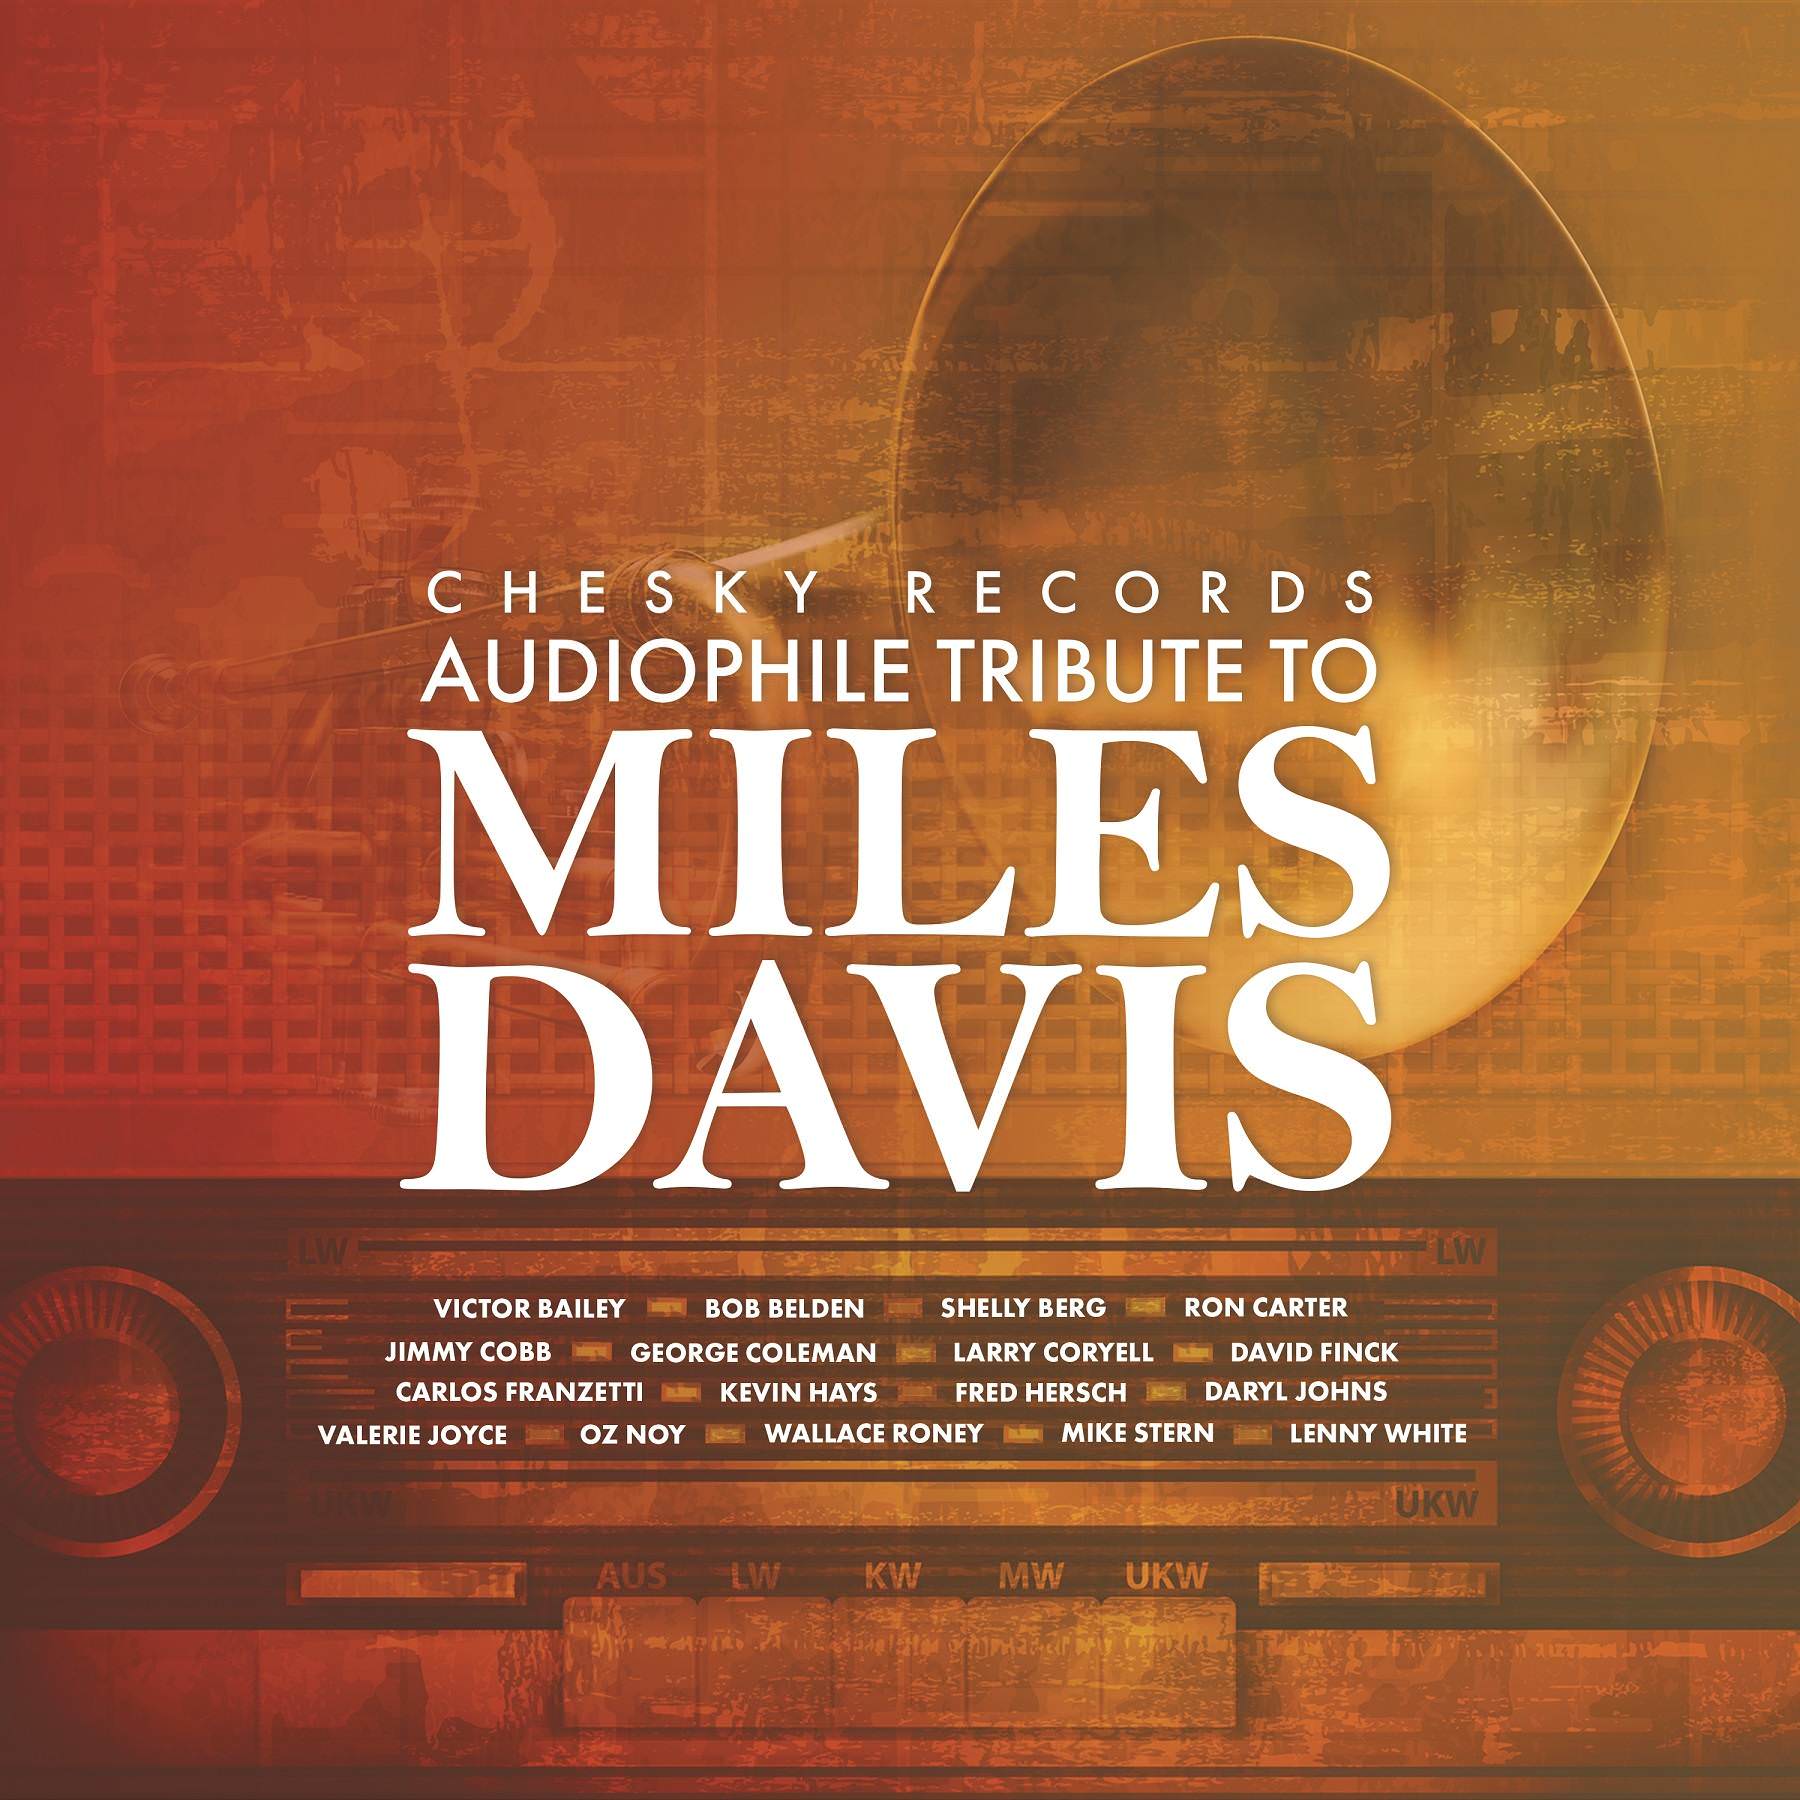 VA – Chesky Records Audiophile Tribute to Miles Davis (2018) [FLAC 24bit/96kHz]